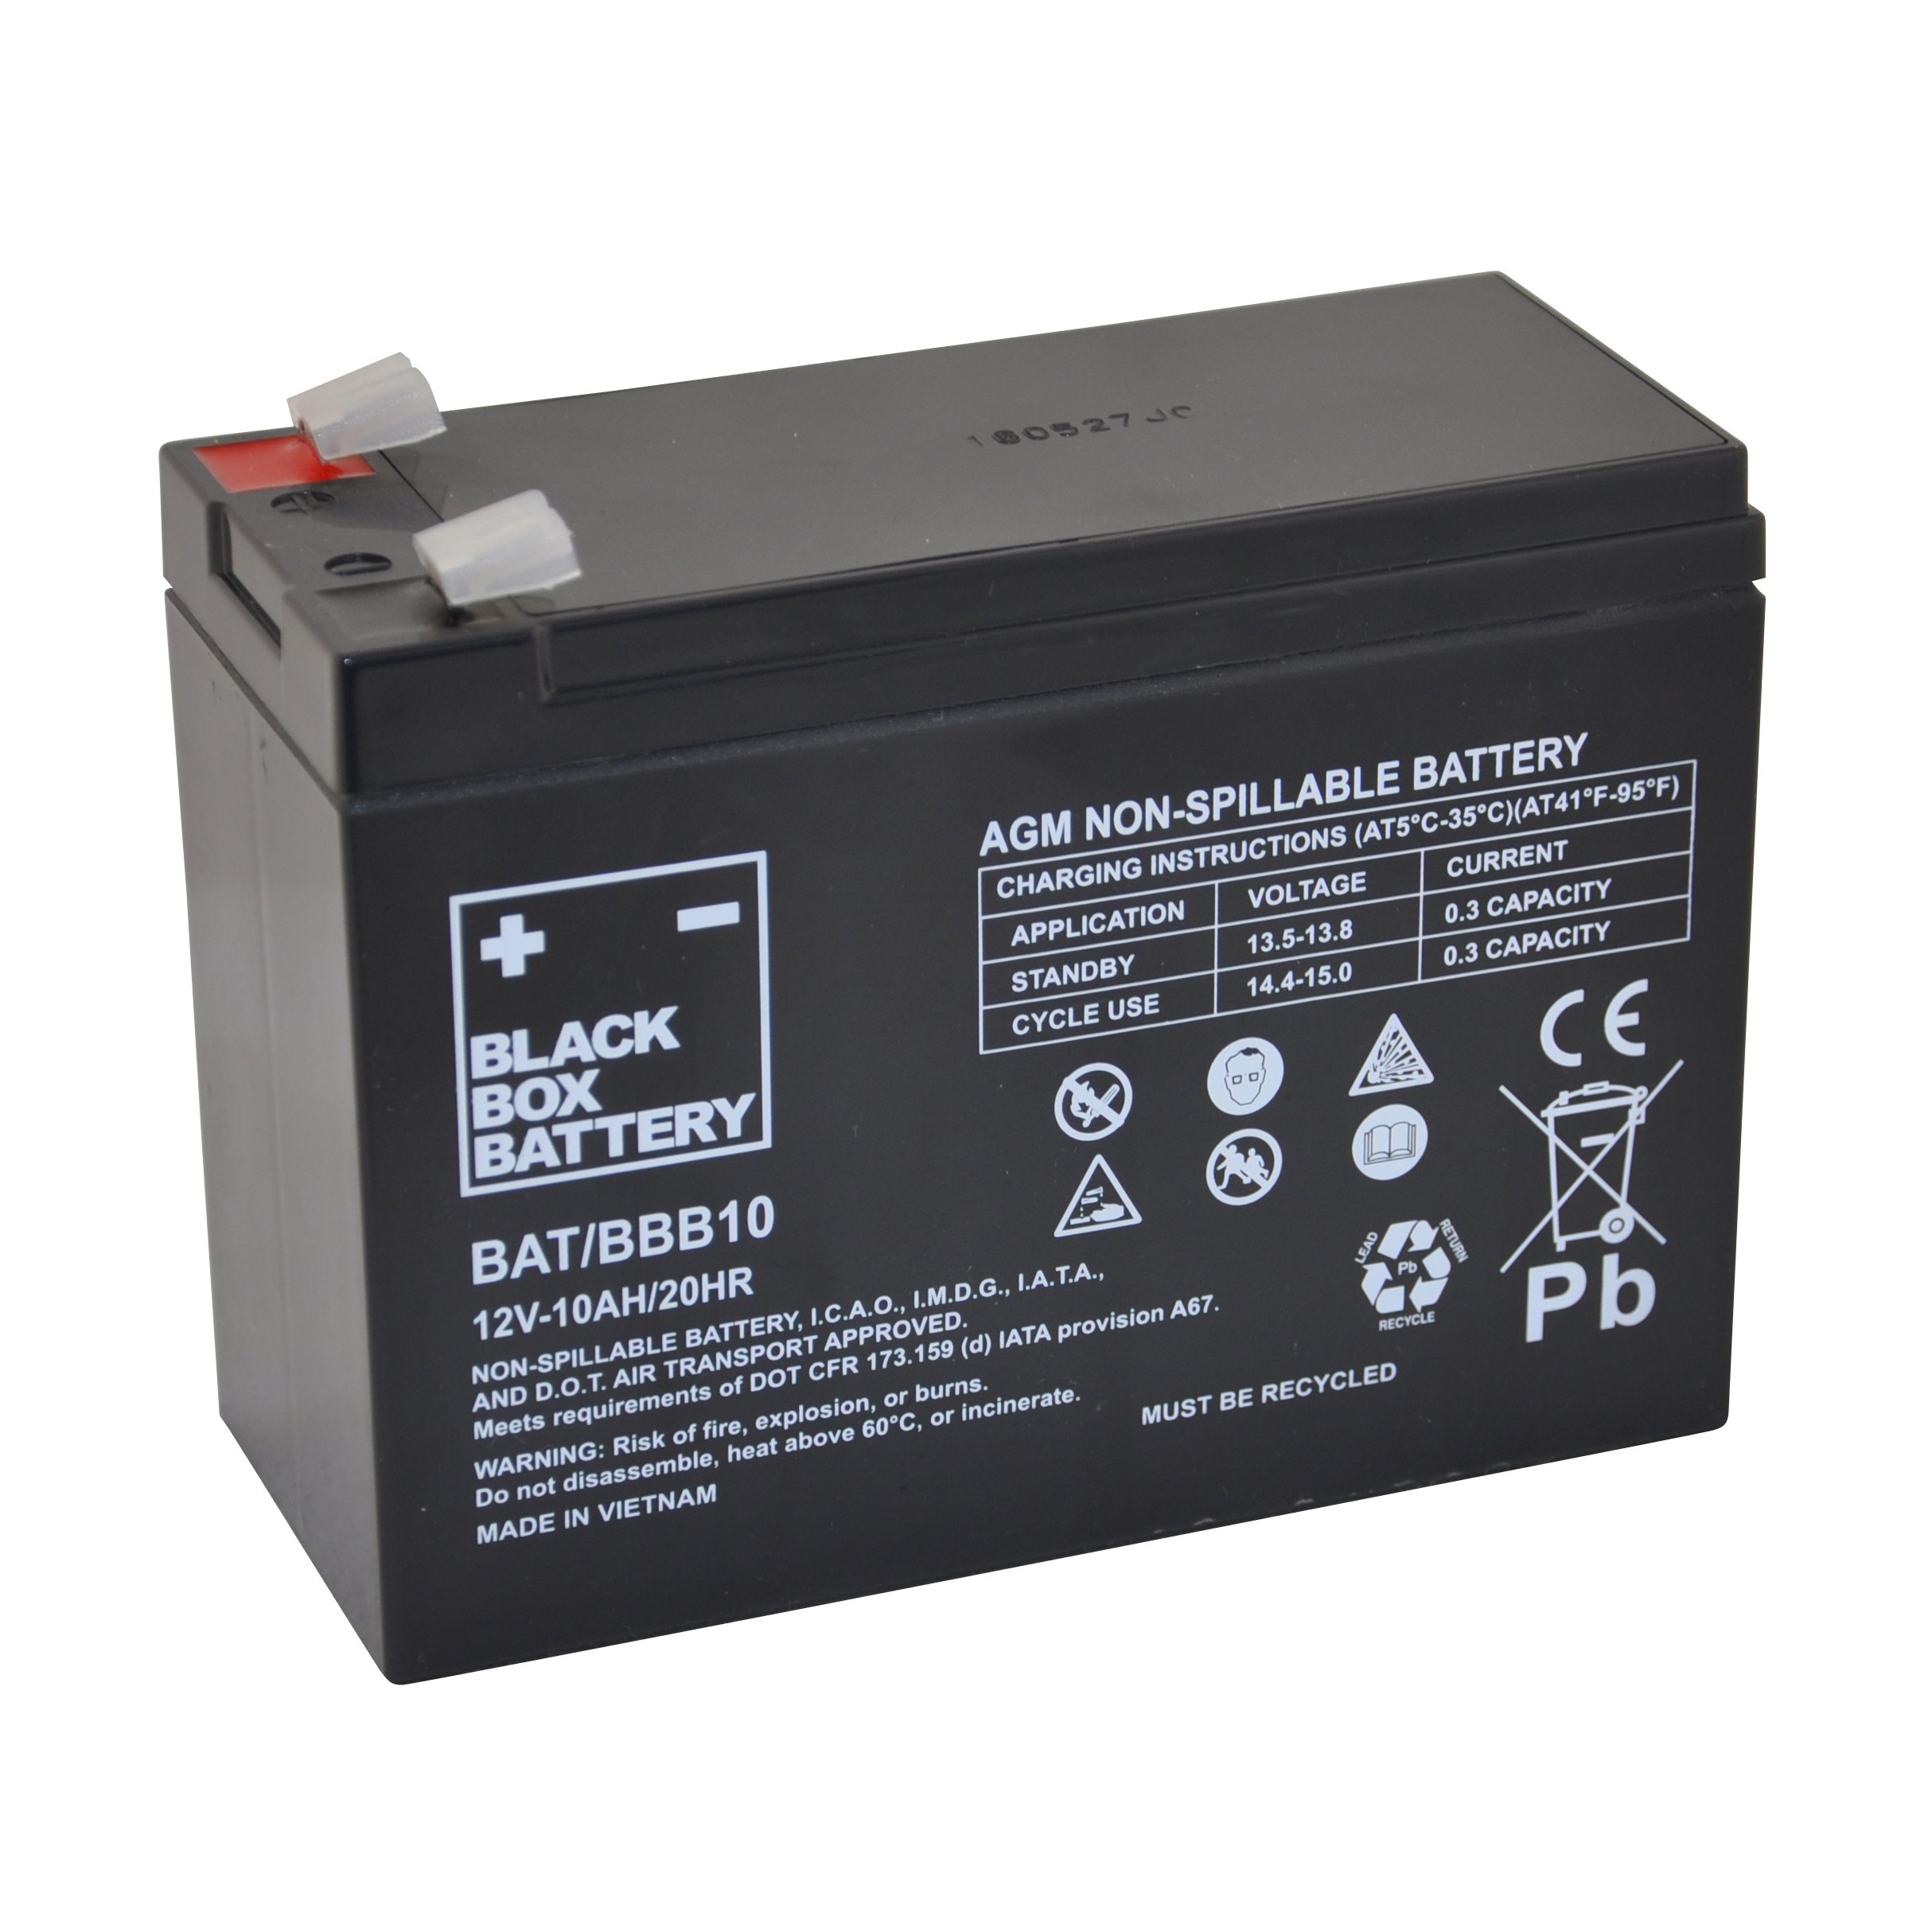 12v 10ah BBB Sealed lead acid (AGM) Mobility Scooter Battery. 12v10ah/10hr. GFM 10(12v10ah/20hr) non-Spillable. Non-Spillable аккумулятор.